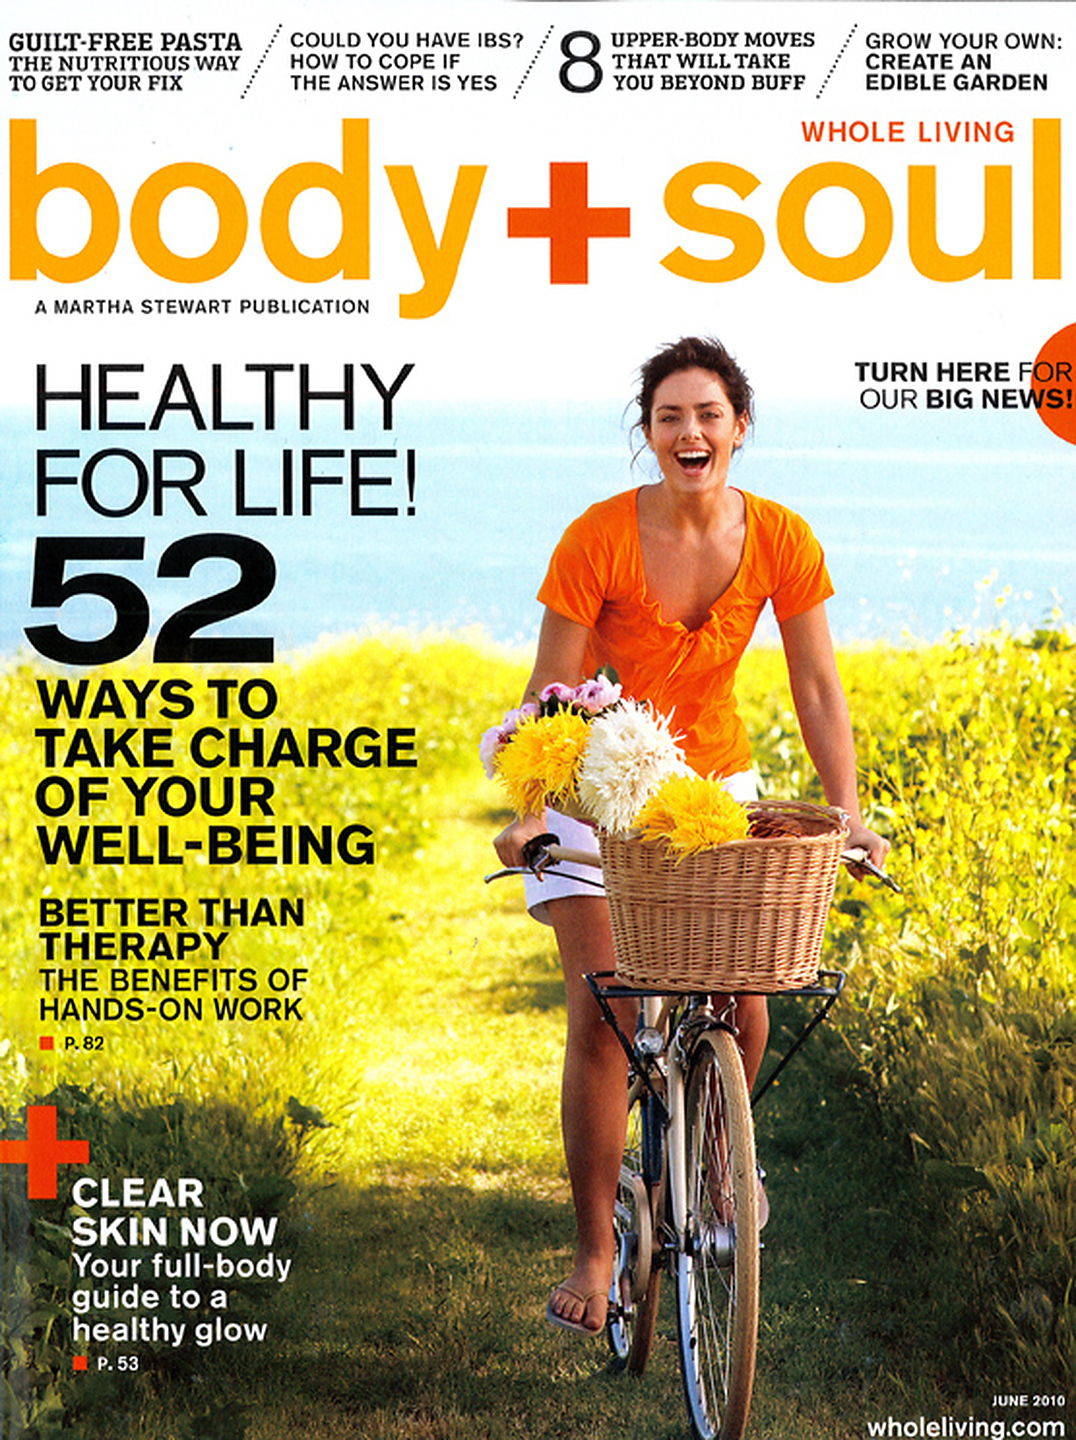 Whole living. Soul журнал. Body and Soul. Body & Soul ...Plus. Картинки боди соул.